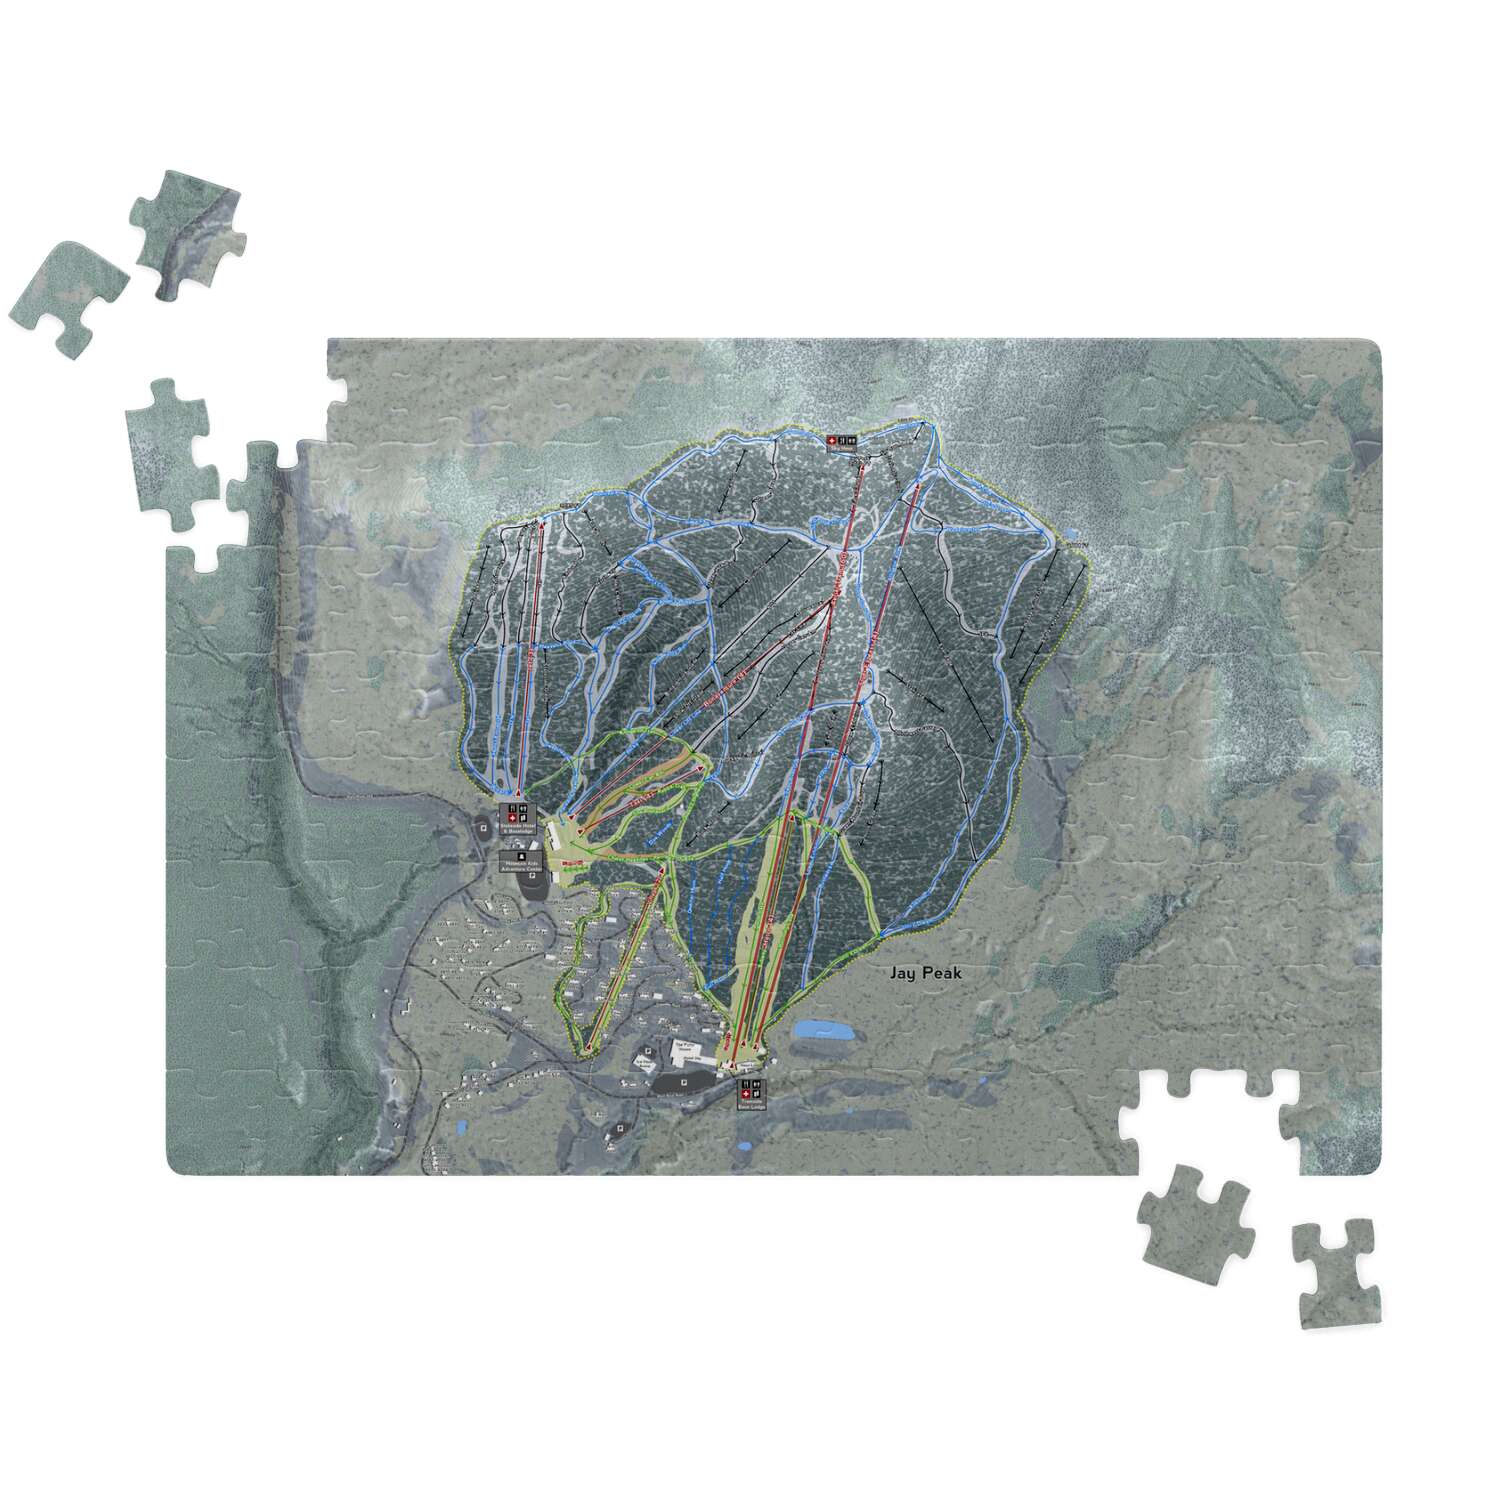 Jay Peak, Vermont Ski Trail Map Puzzle - Powderaddicts